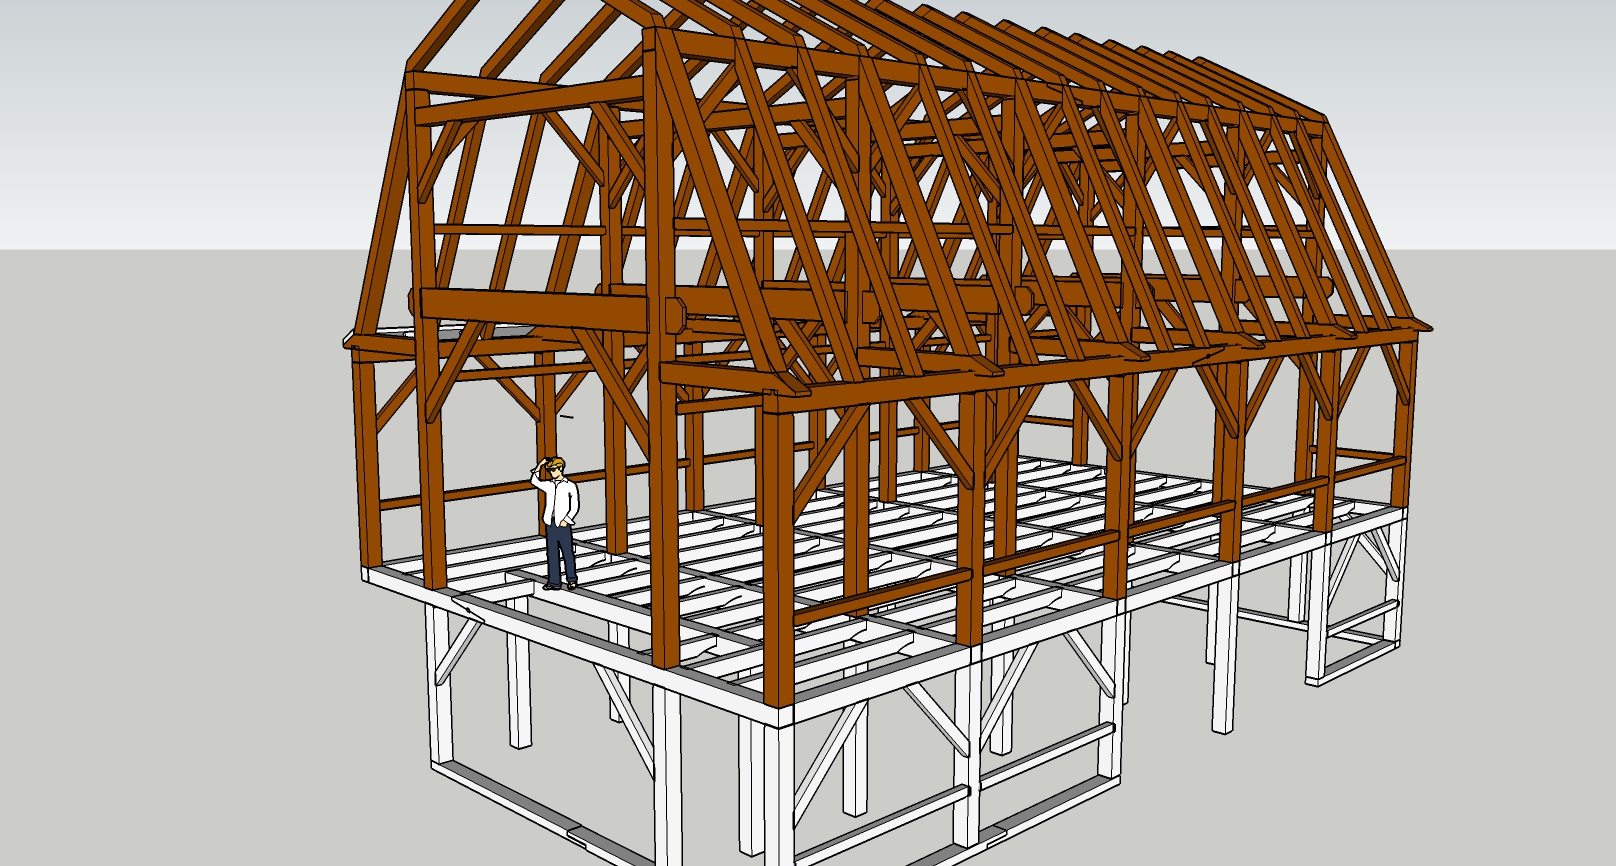 Timber frame barn design by Uncarved Block